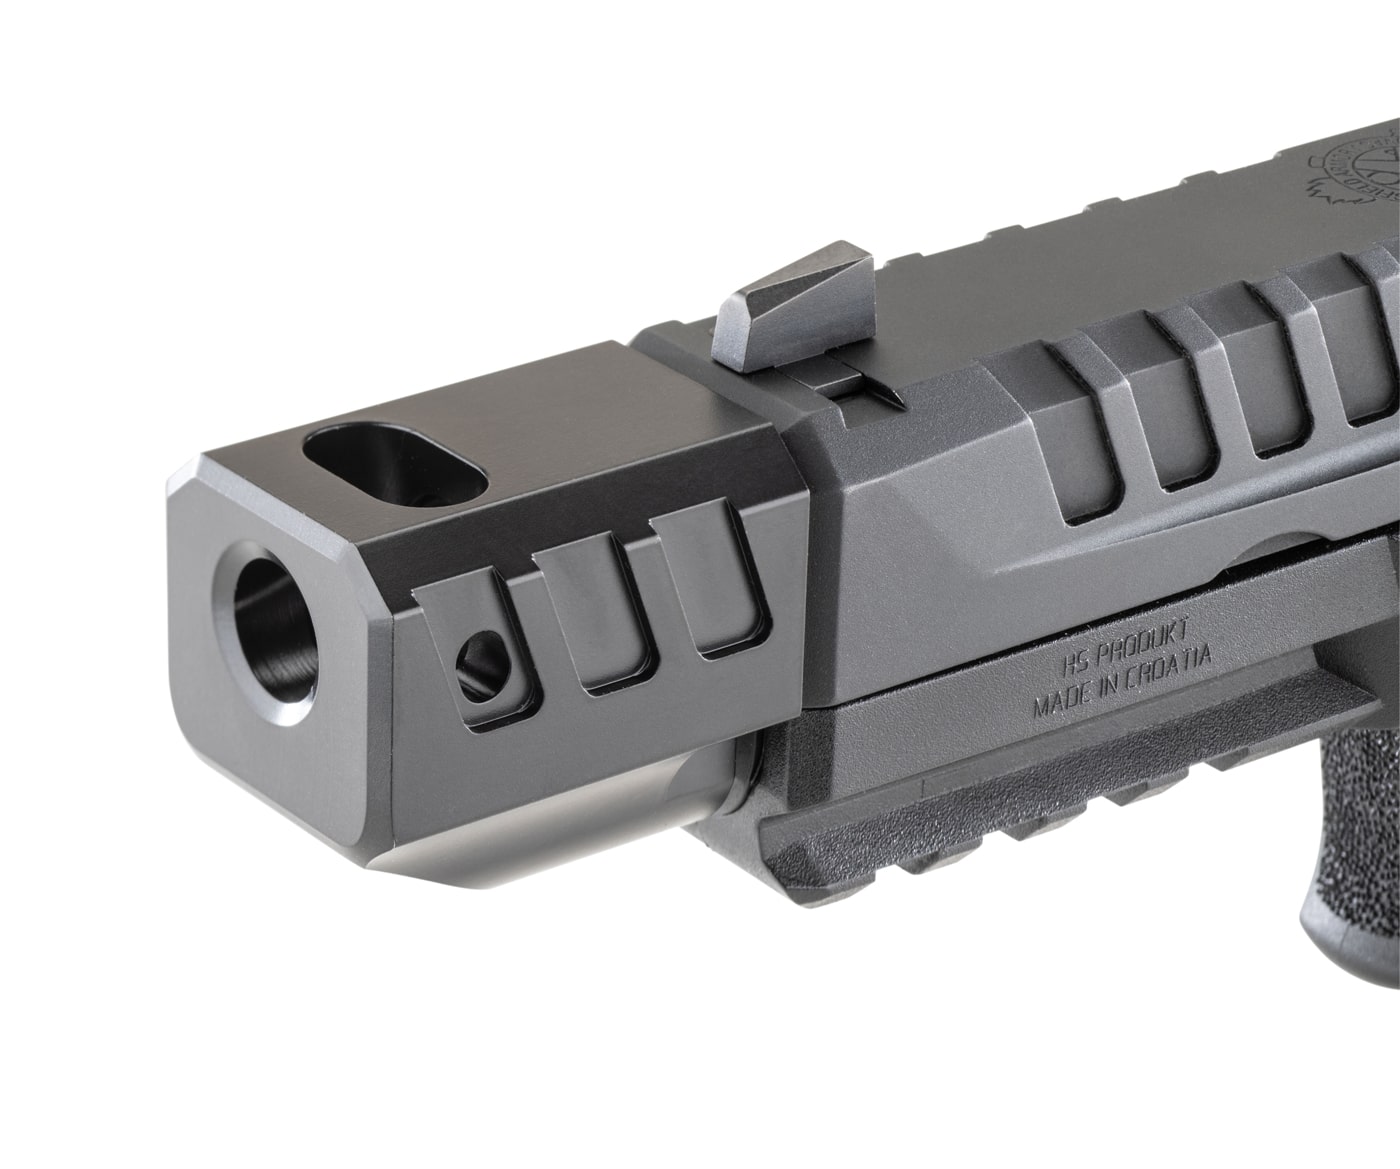 Springer Precision comp for Springfield Armory Echelon 9mm pistol